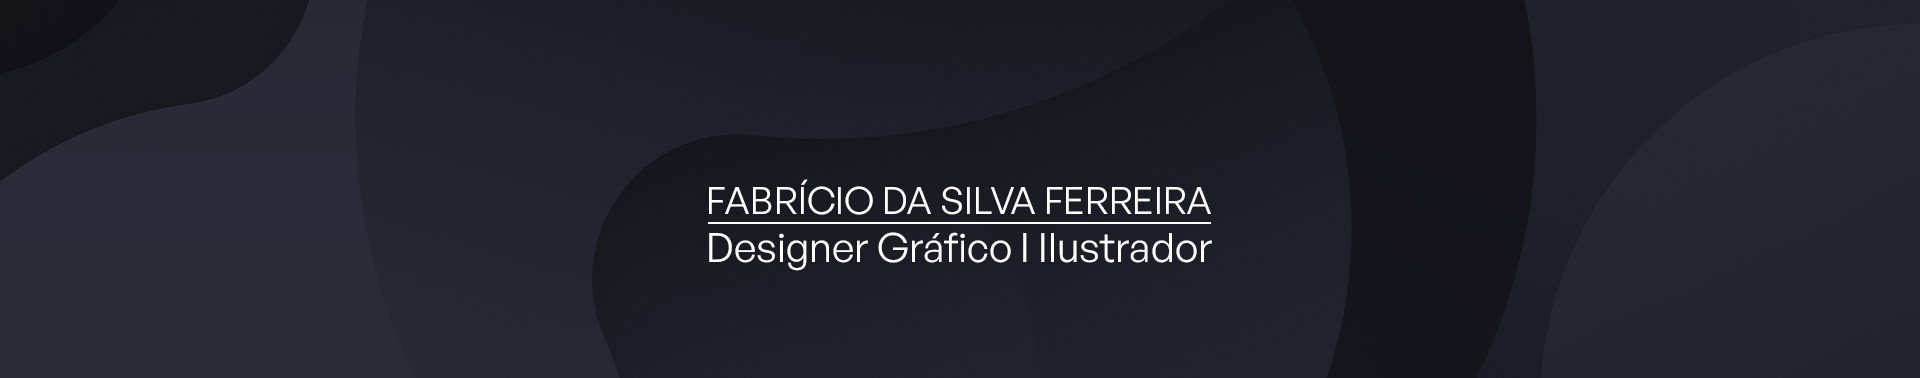 Fabrício da Silva Ferreira のプロファイルバナー